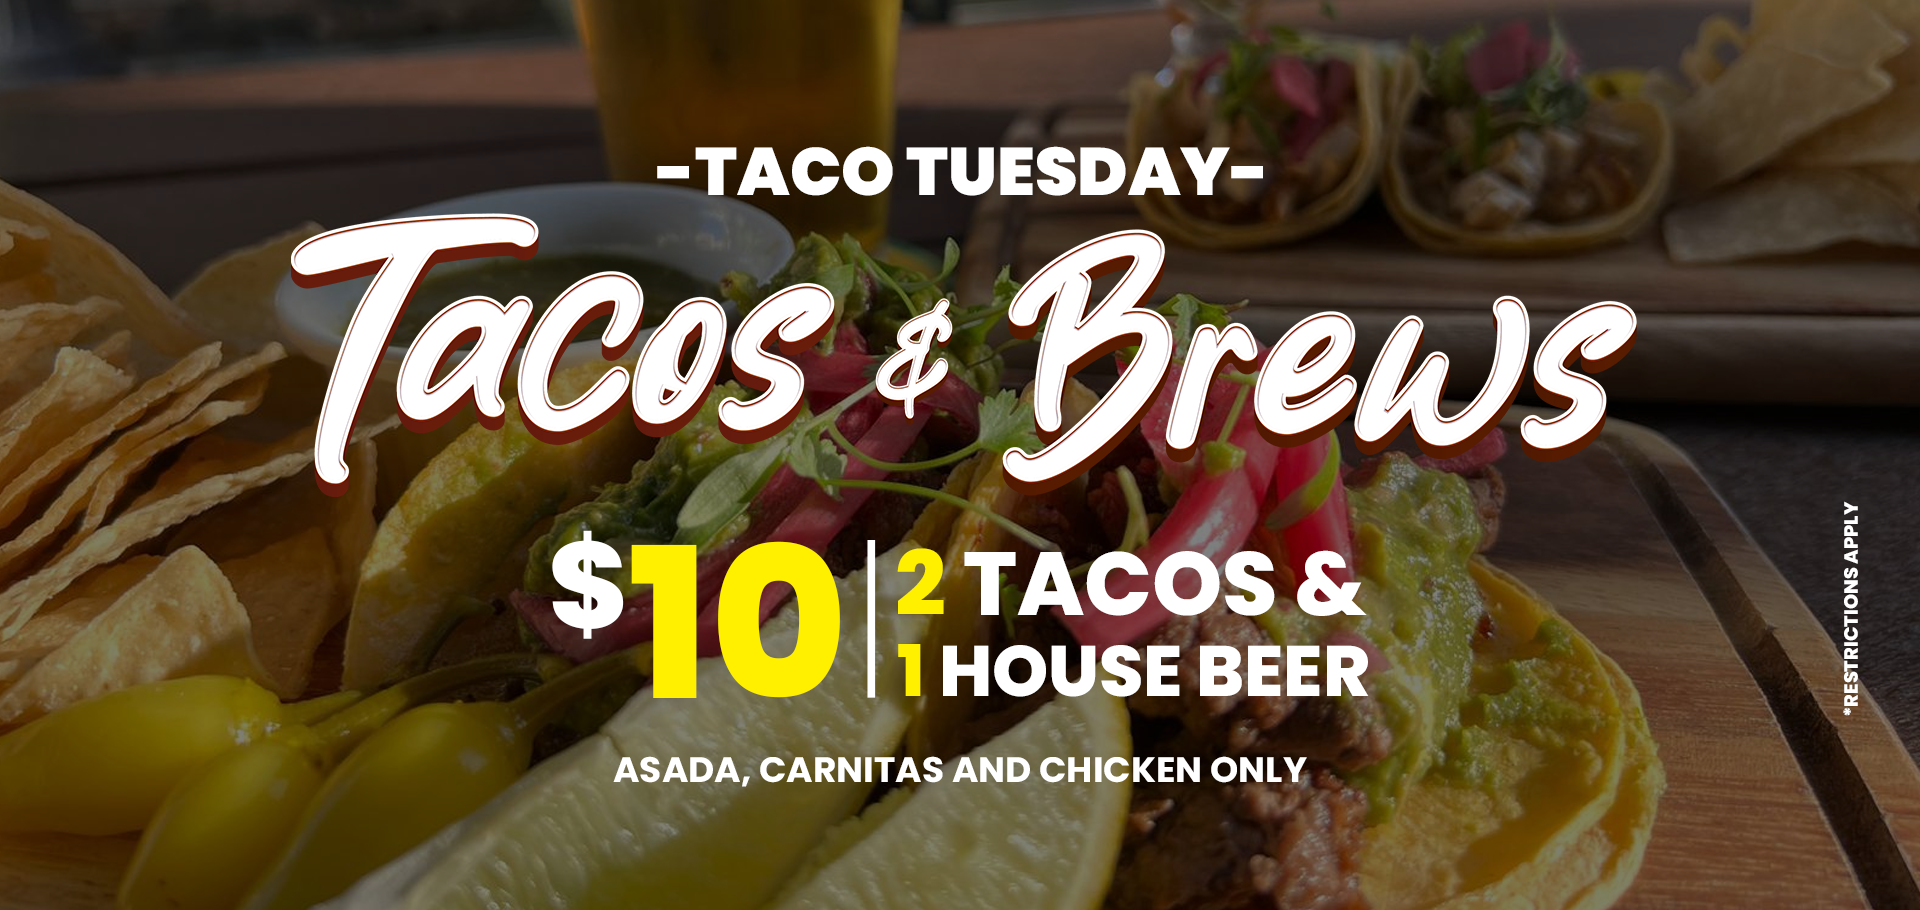 Tacos & Brews - $10 | 2 Tacos & 1 House Beer